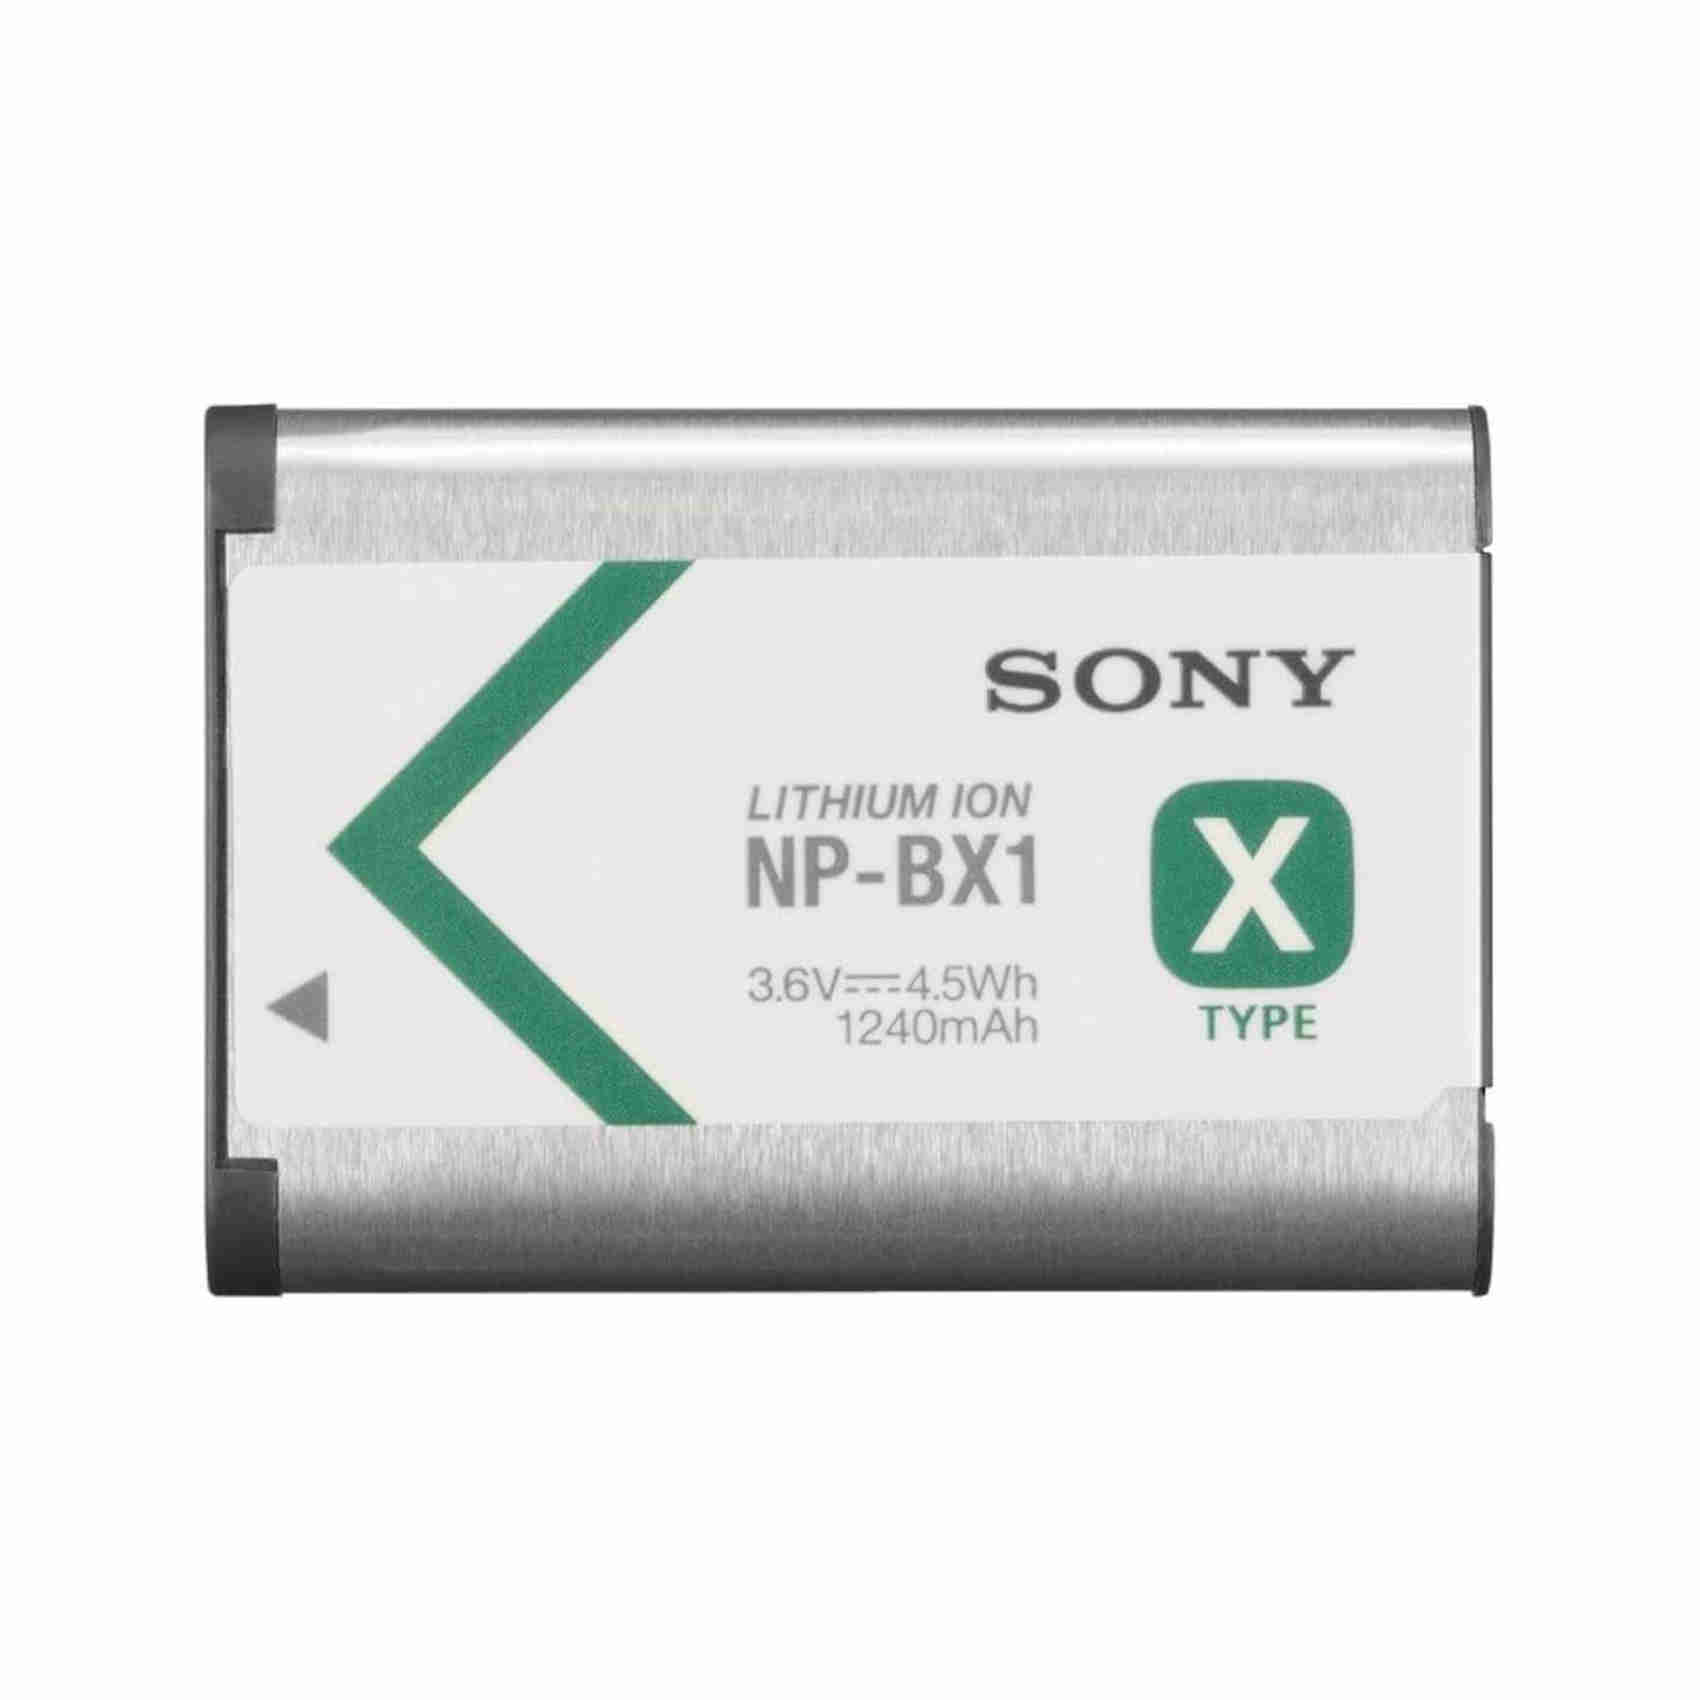 sony np-bx1 batteria ricaricabile infolithium serie x per fotocamere compatte cyber-shot dscrx100, dschx300 e dscwx300, 3.6 v, 1240 mah, argento/ nero uomo